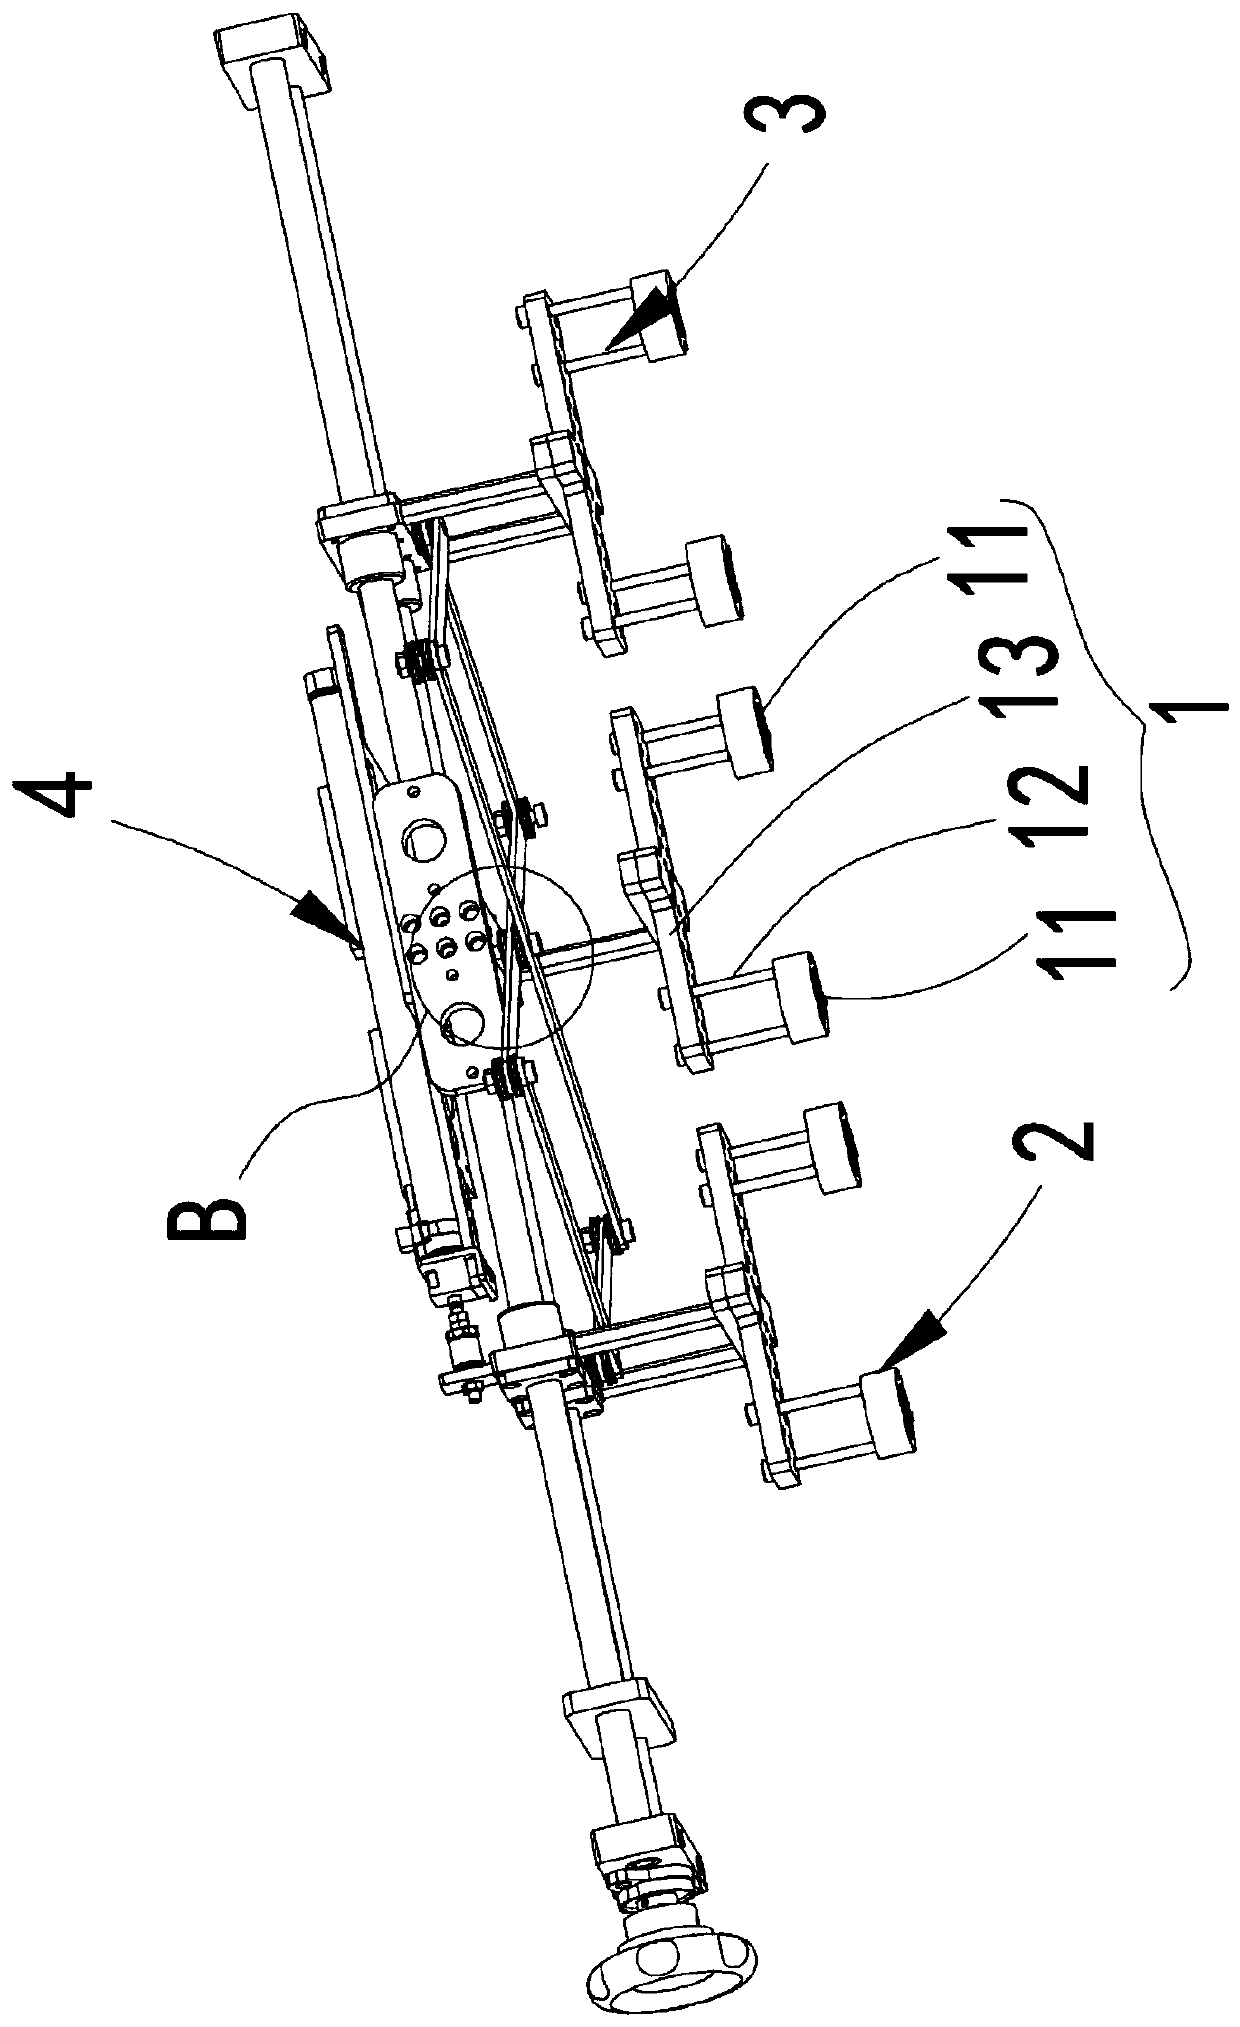 Single power two-way moving mechanism and flat feeding machine